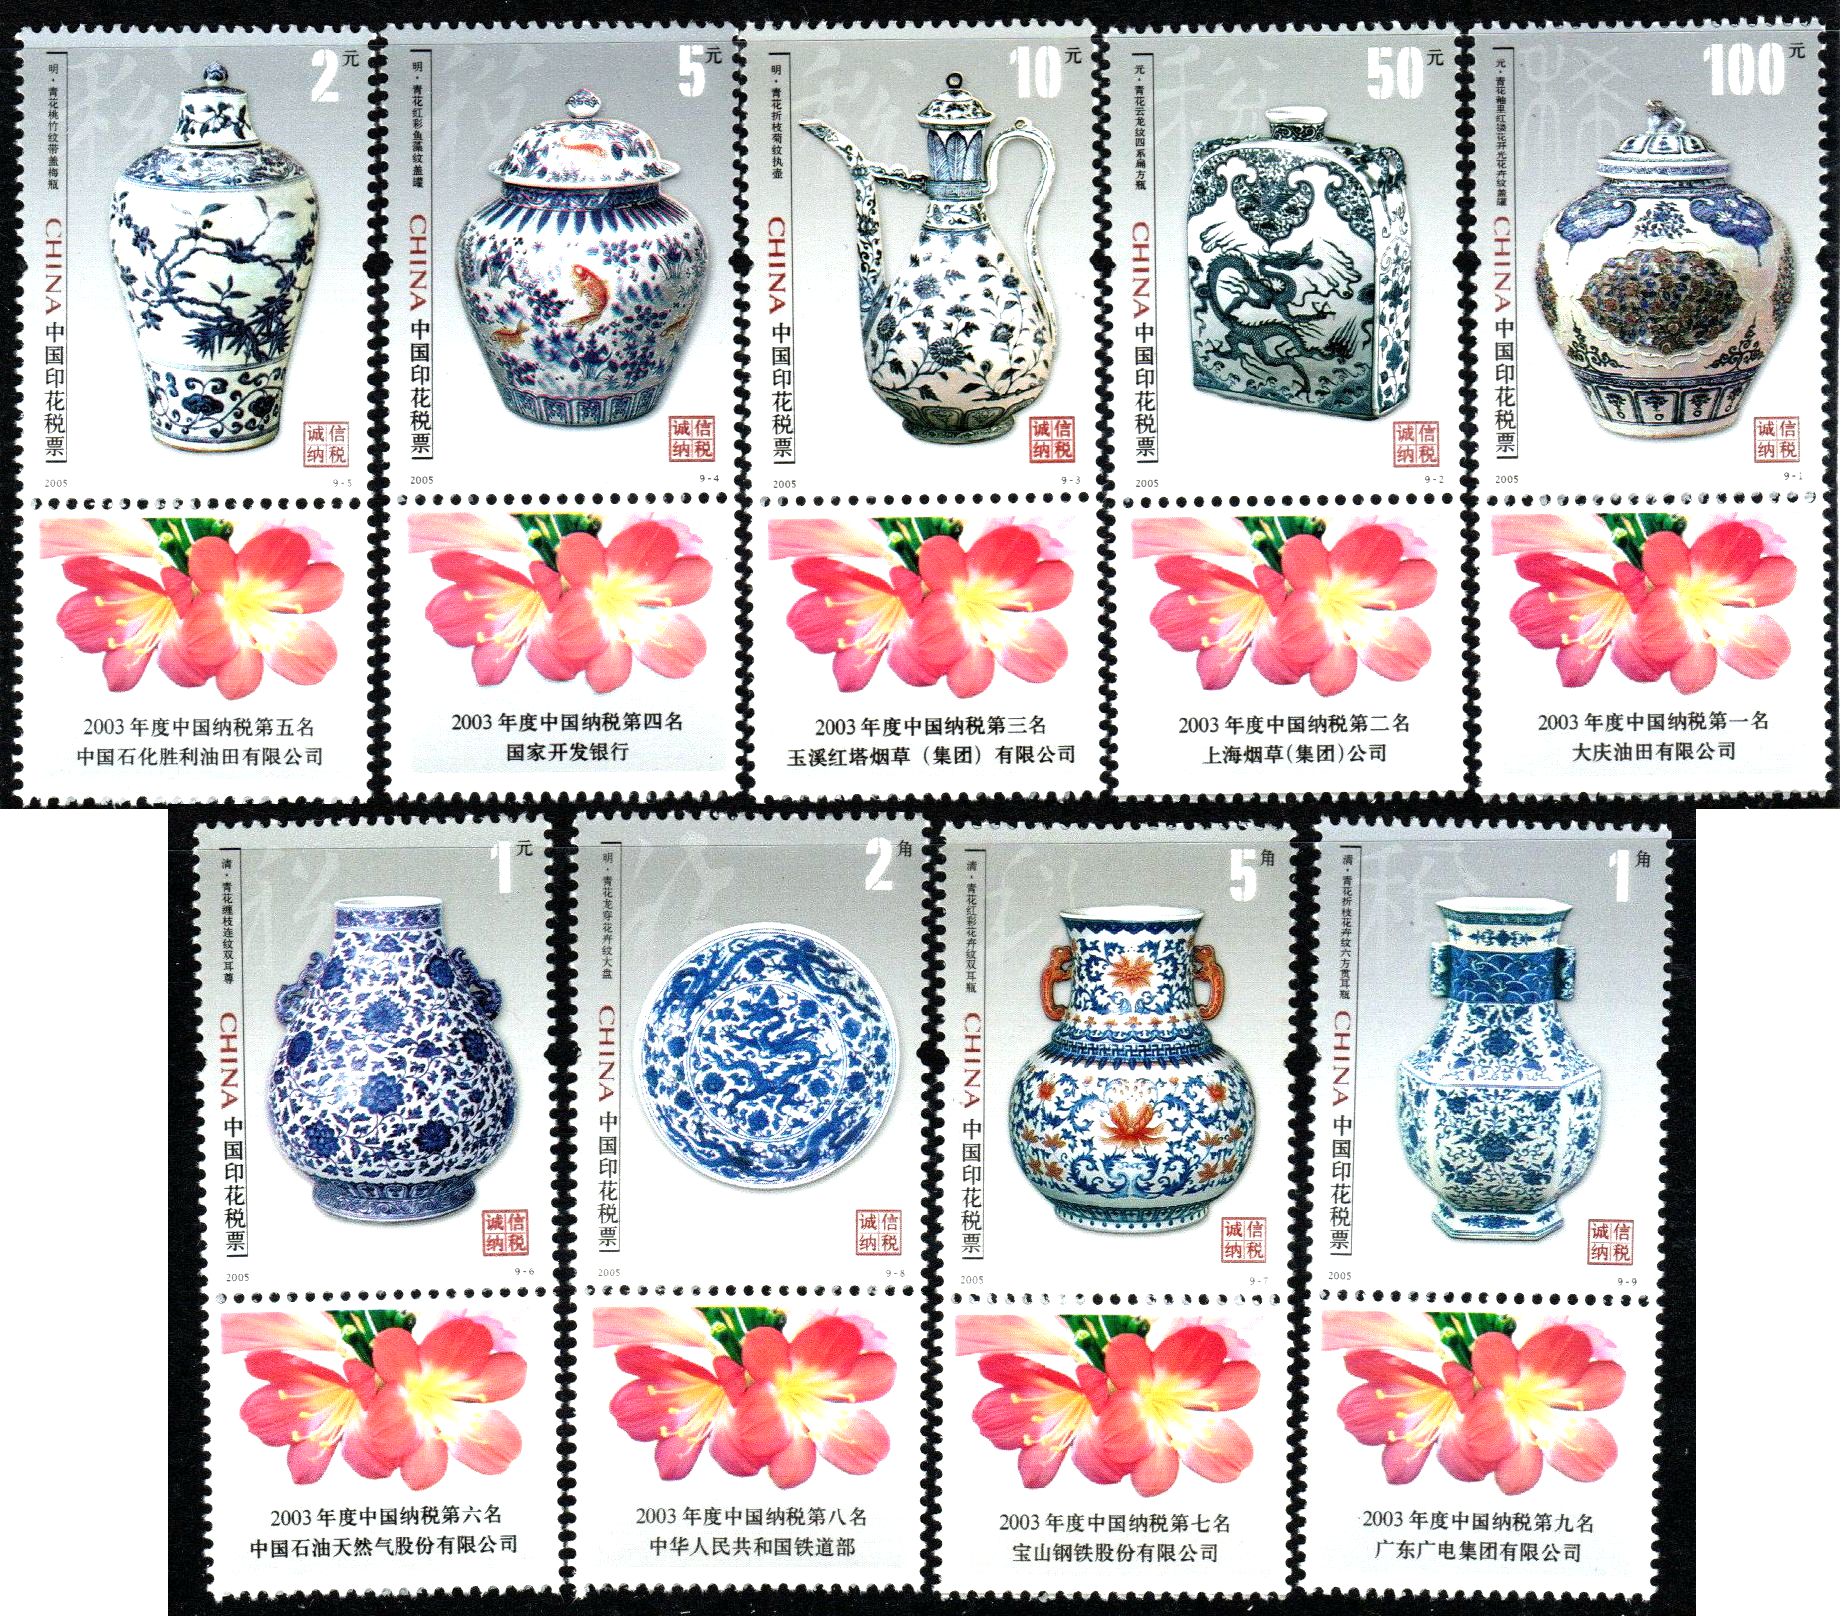 R2216, P.R.China Revenue Stamps, Full set 9 pcs, 2005, Porcelain